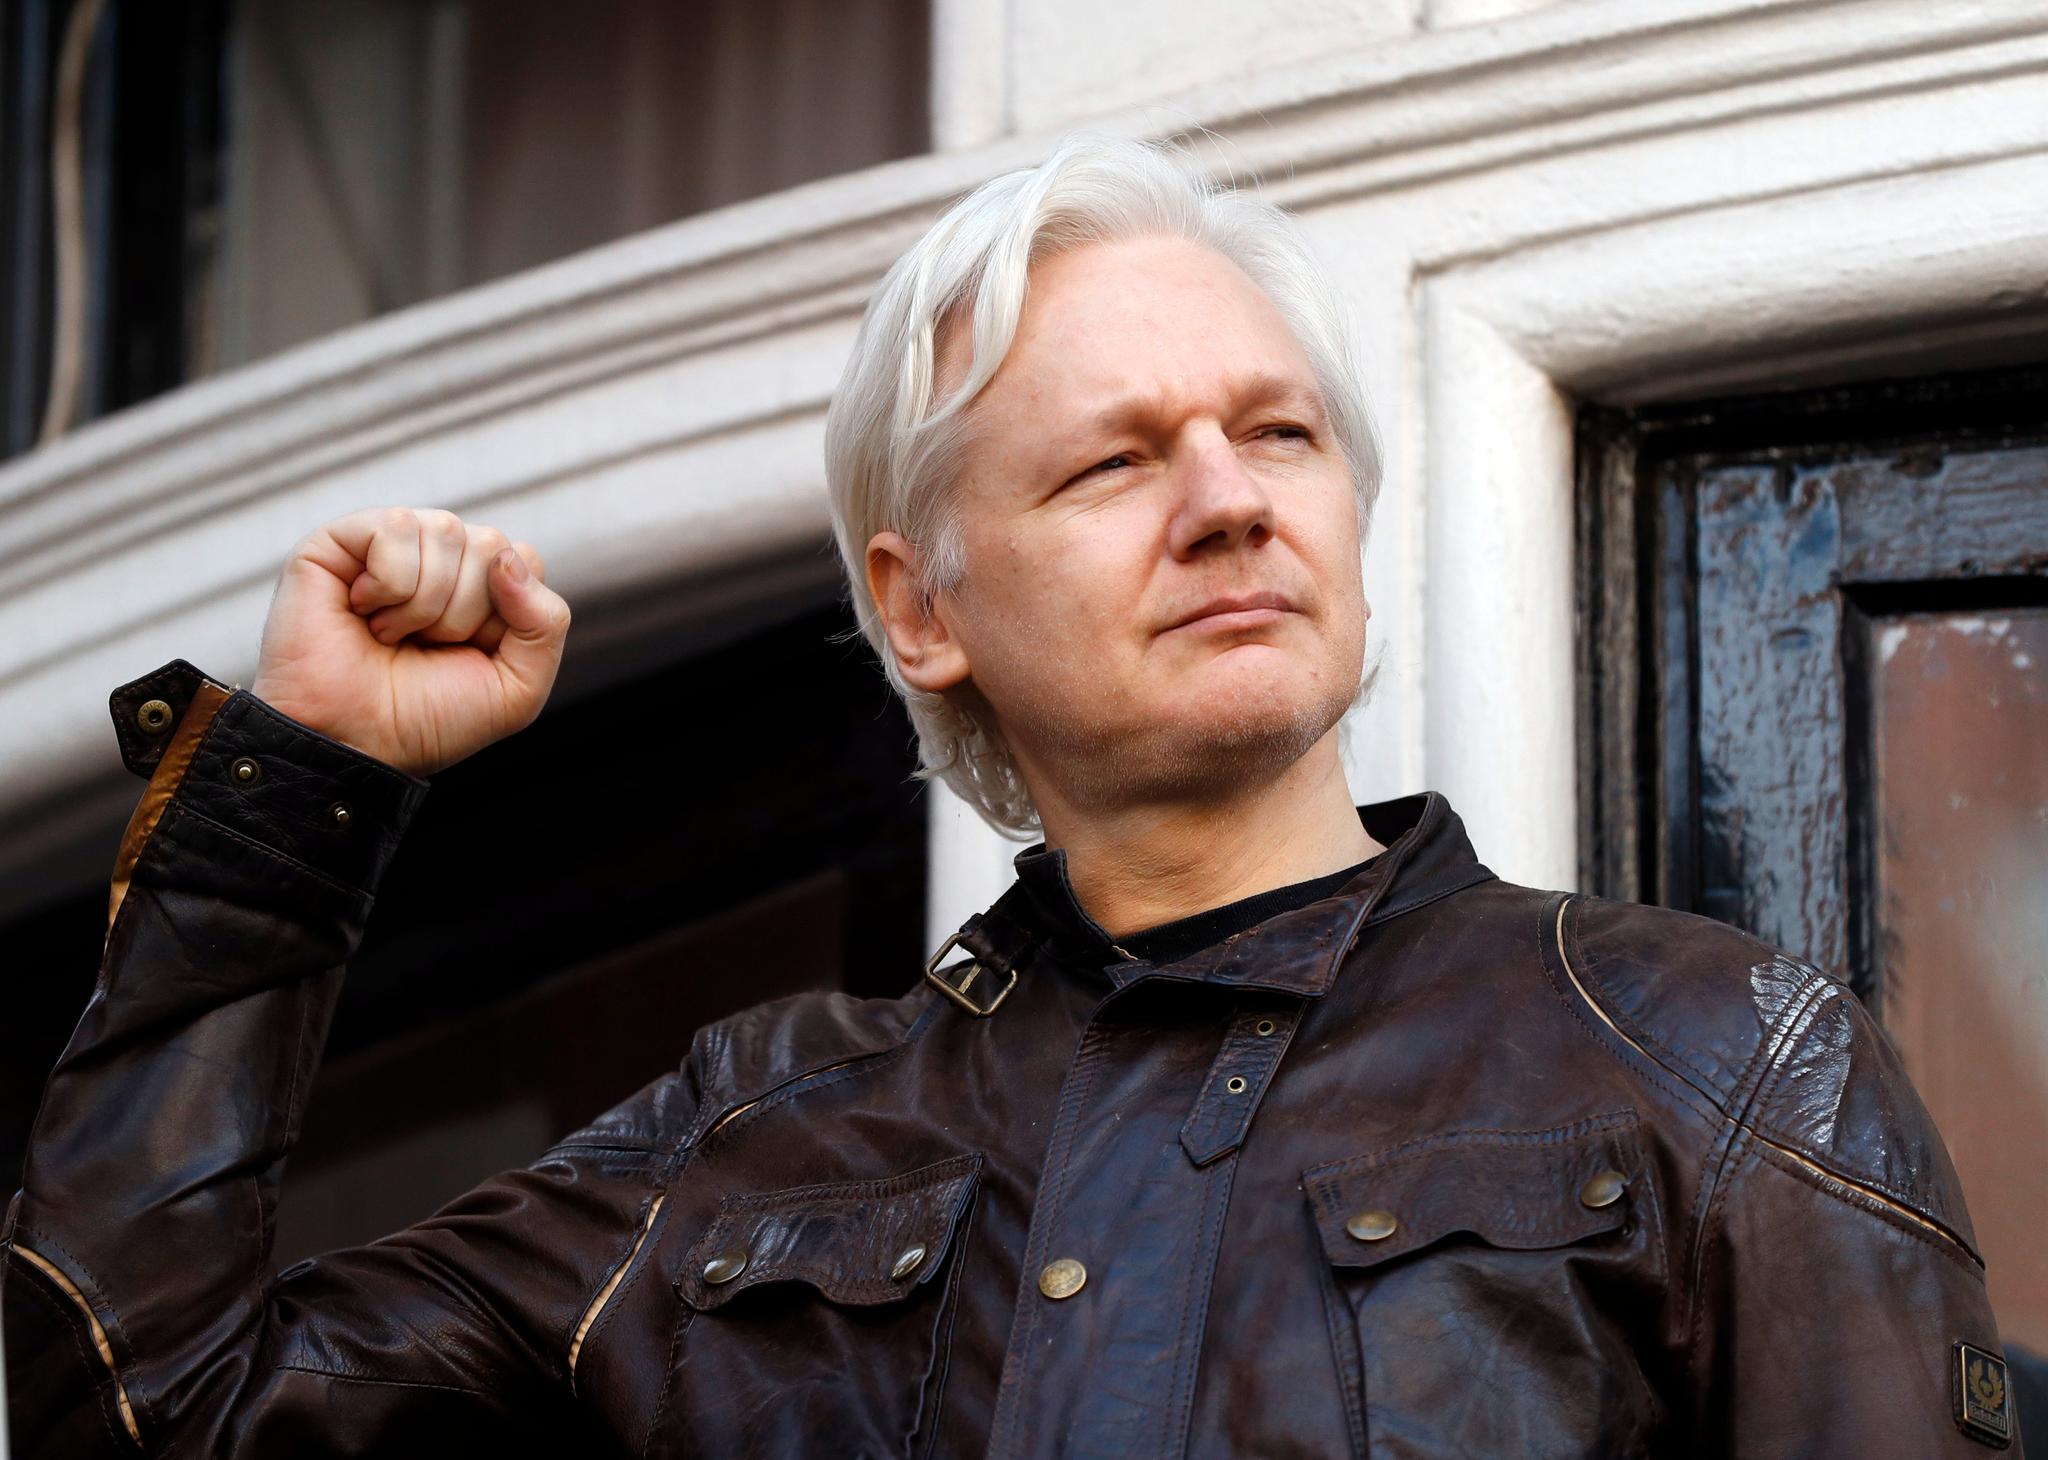 Løslat Assange. Nå.